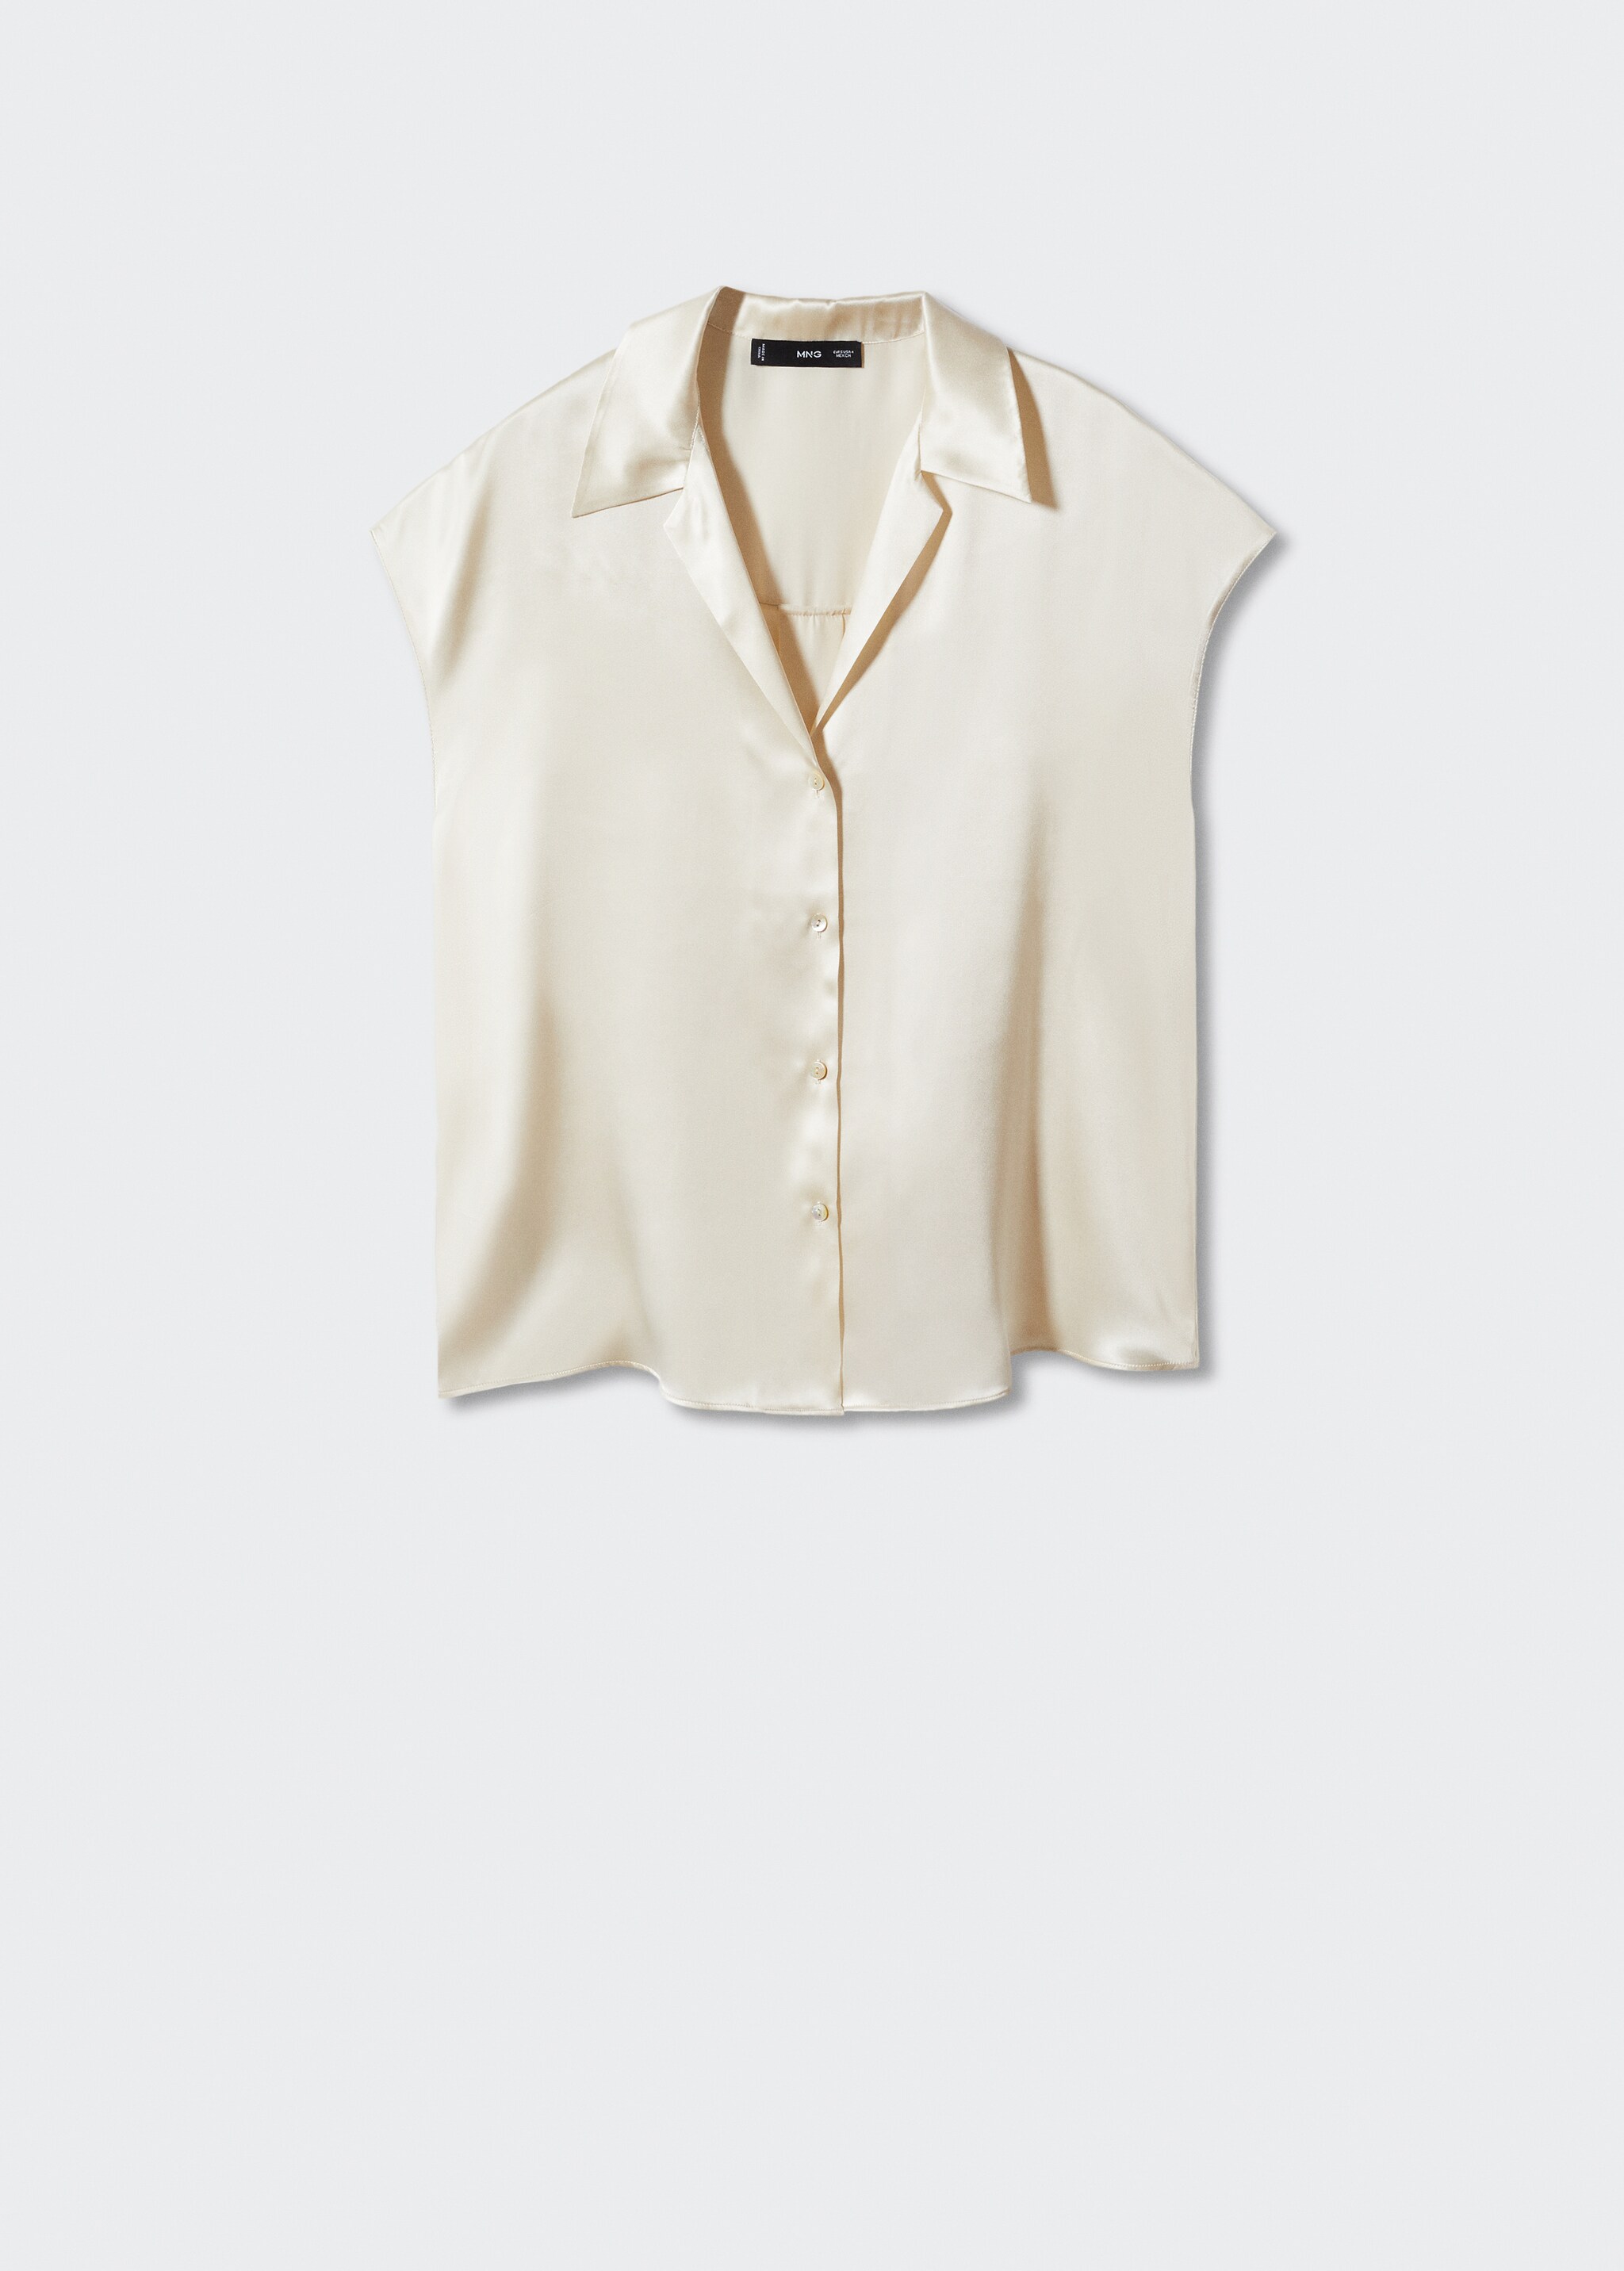 Атласная рубашка из шелка - Изделие без модели